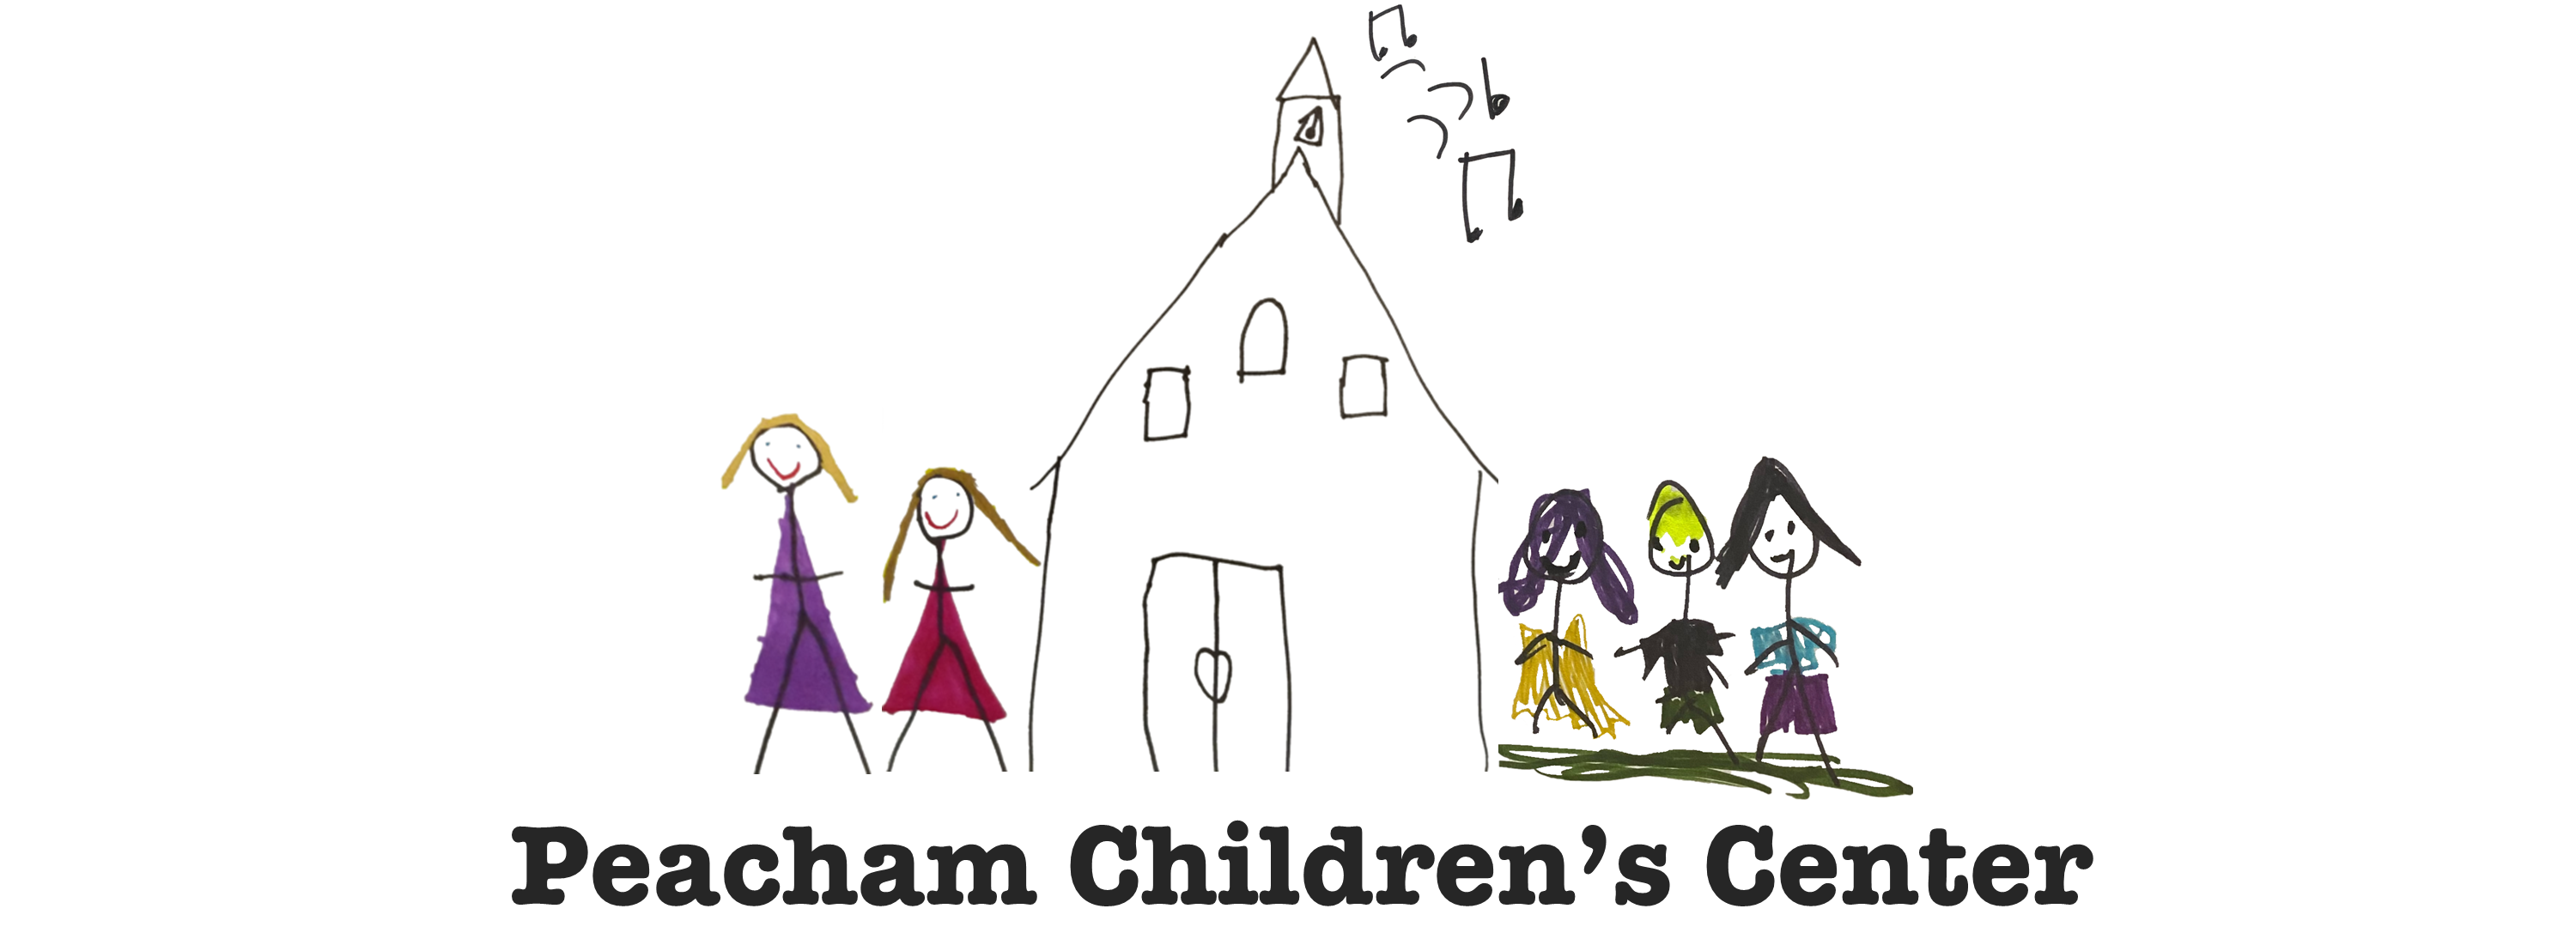 Peacham Children's Center